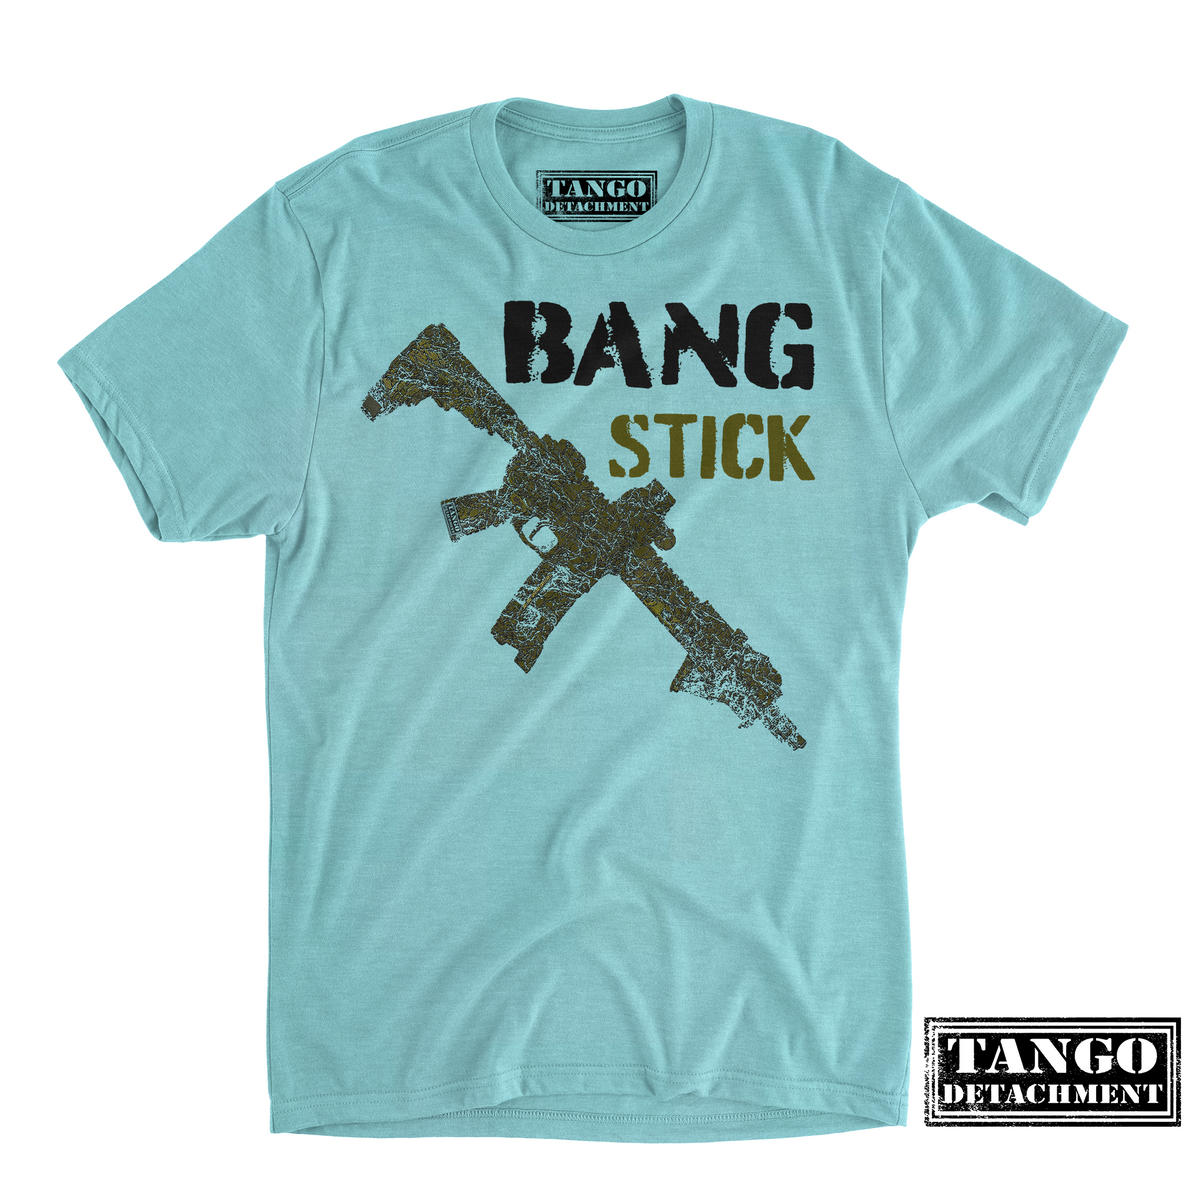 "Bang Stick" Tango Tee